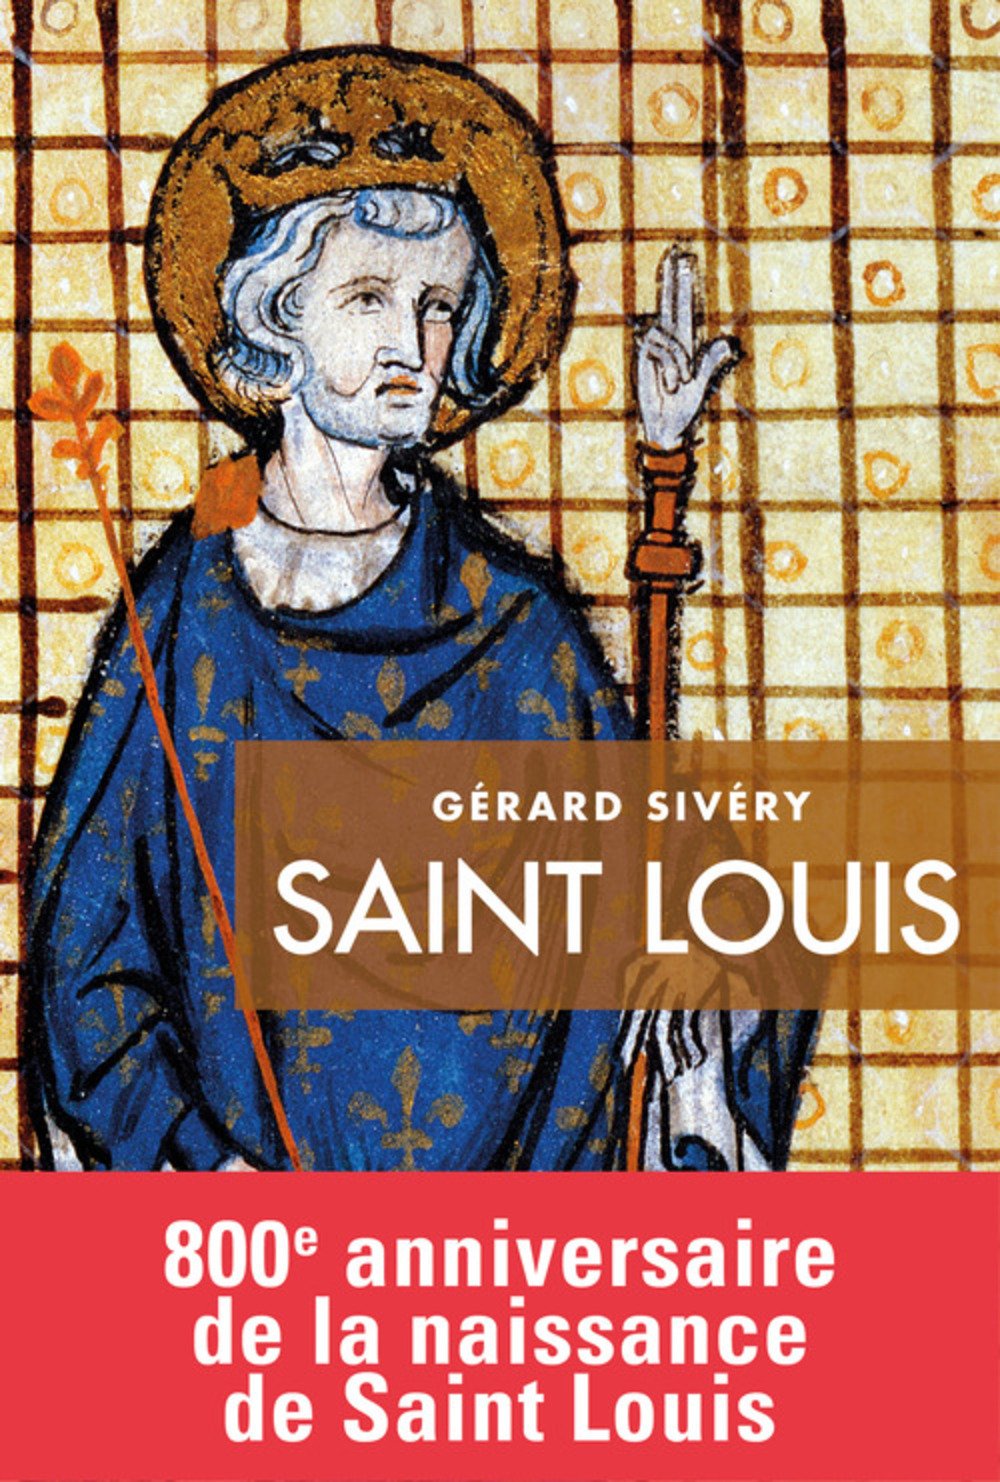 Saint-Louis, 2014, 688 p.